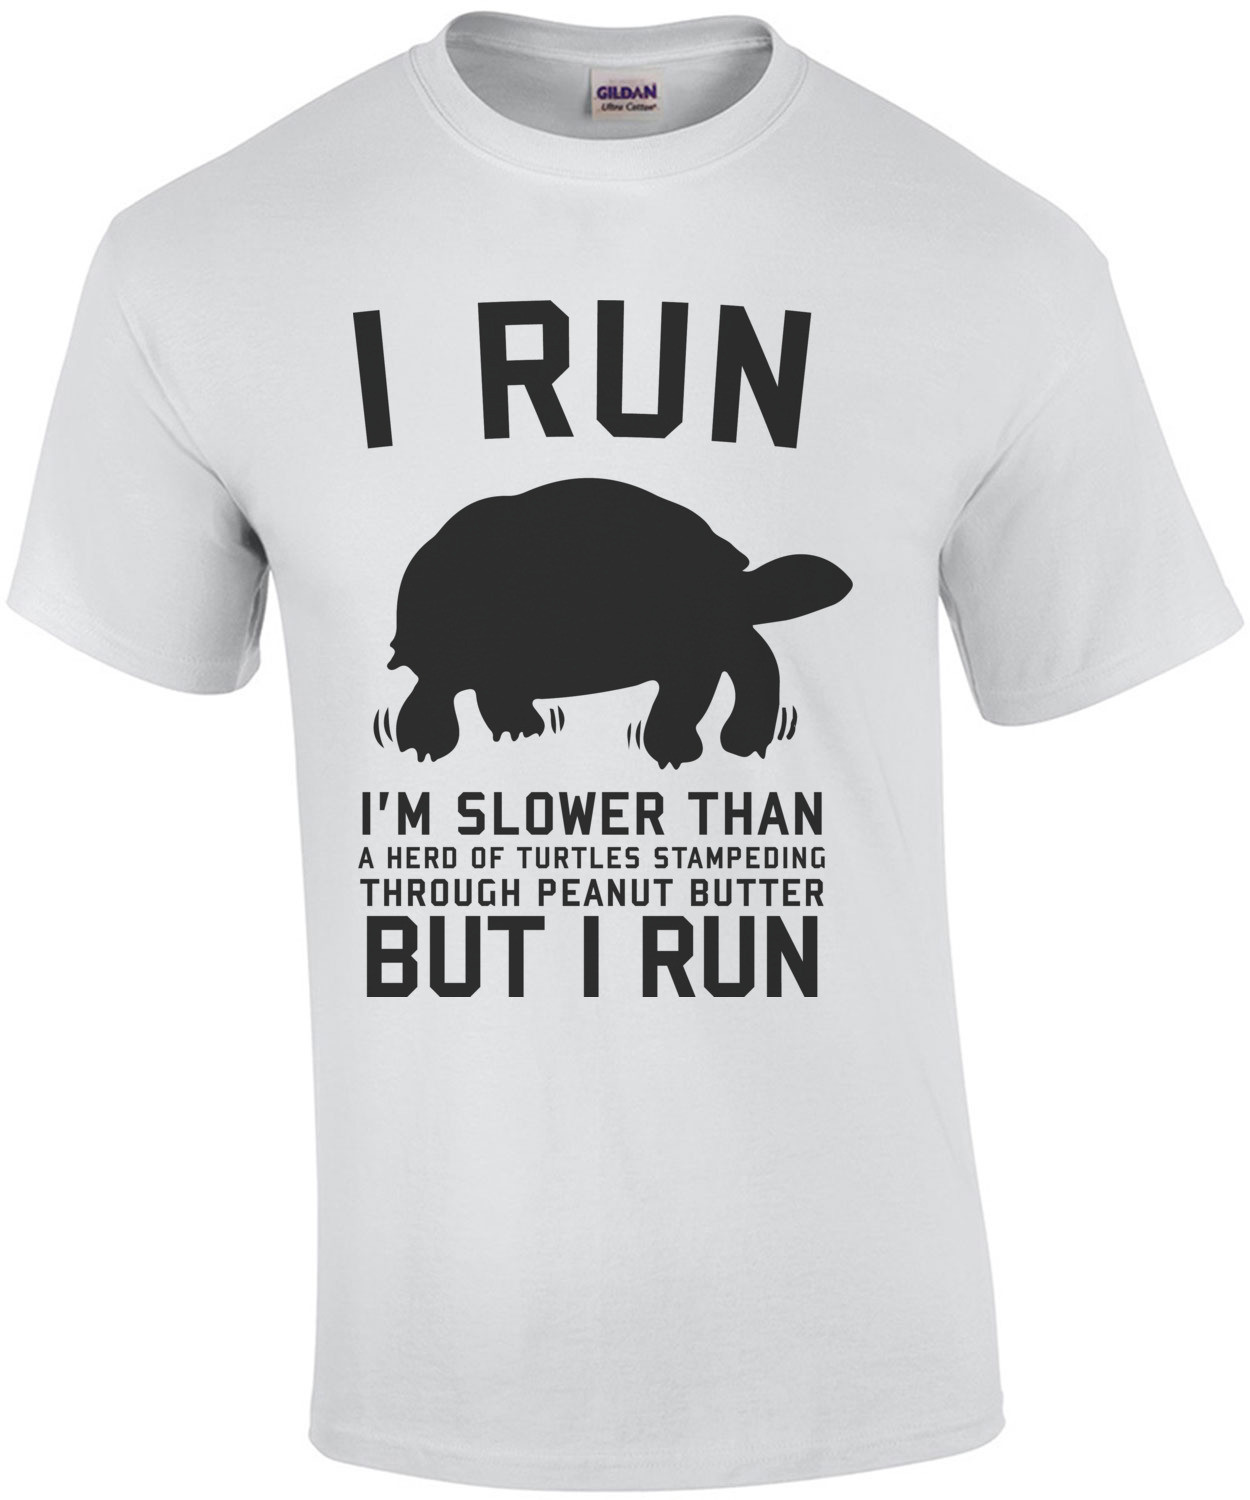 I Run Slower Than A Herd Of Turtles Stampeding Through Peanut Butter. But I Run. Shirt